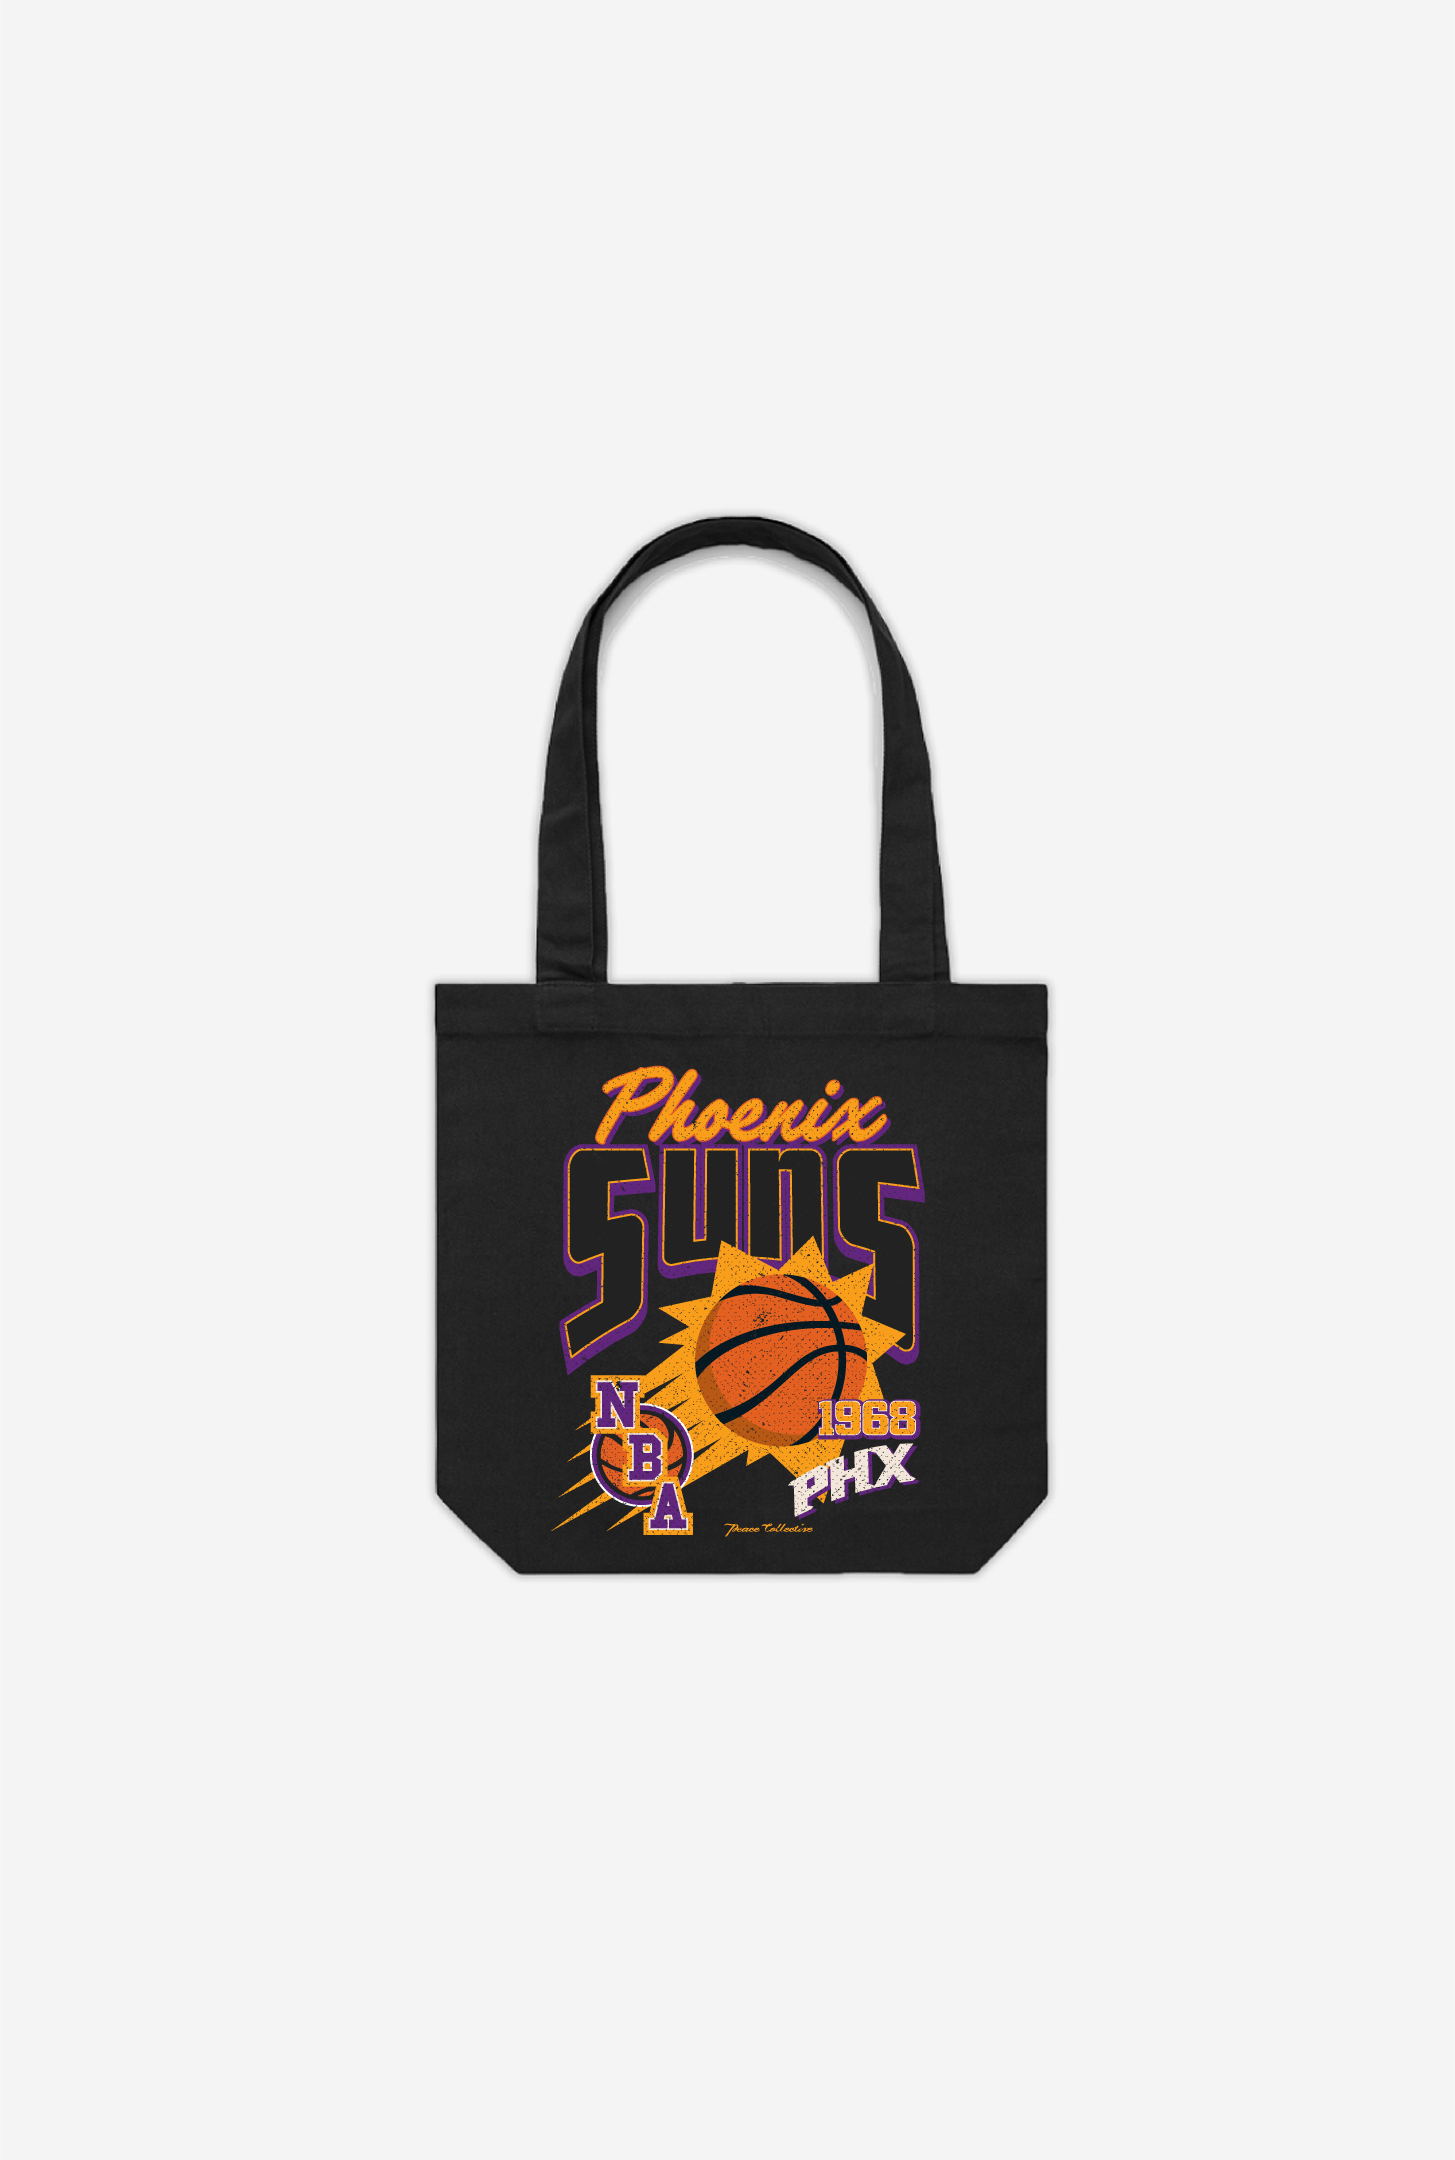 Phoenix Suns Tote - Black